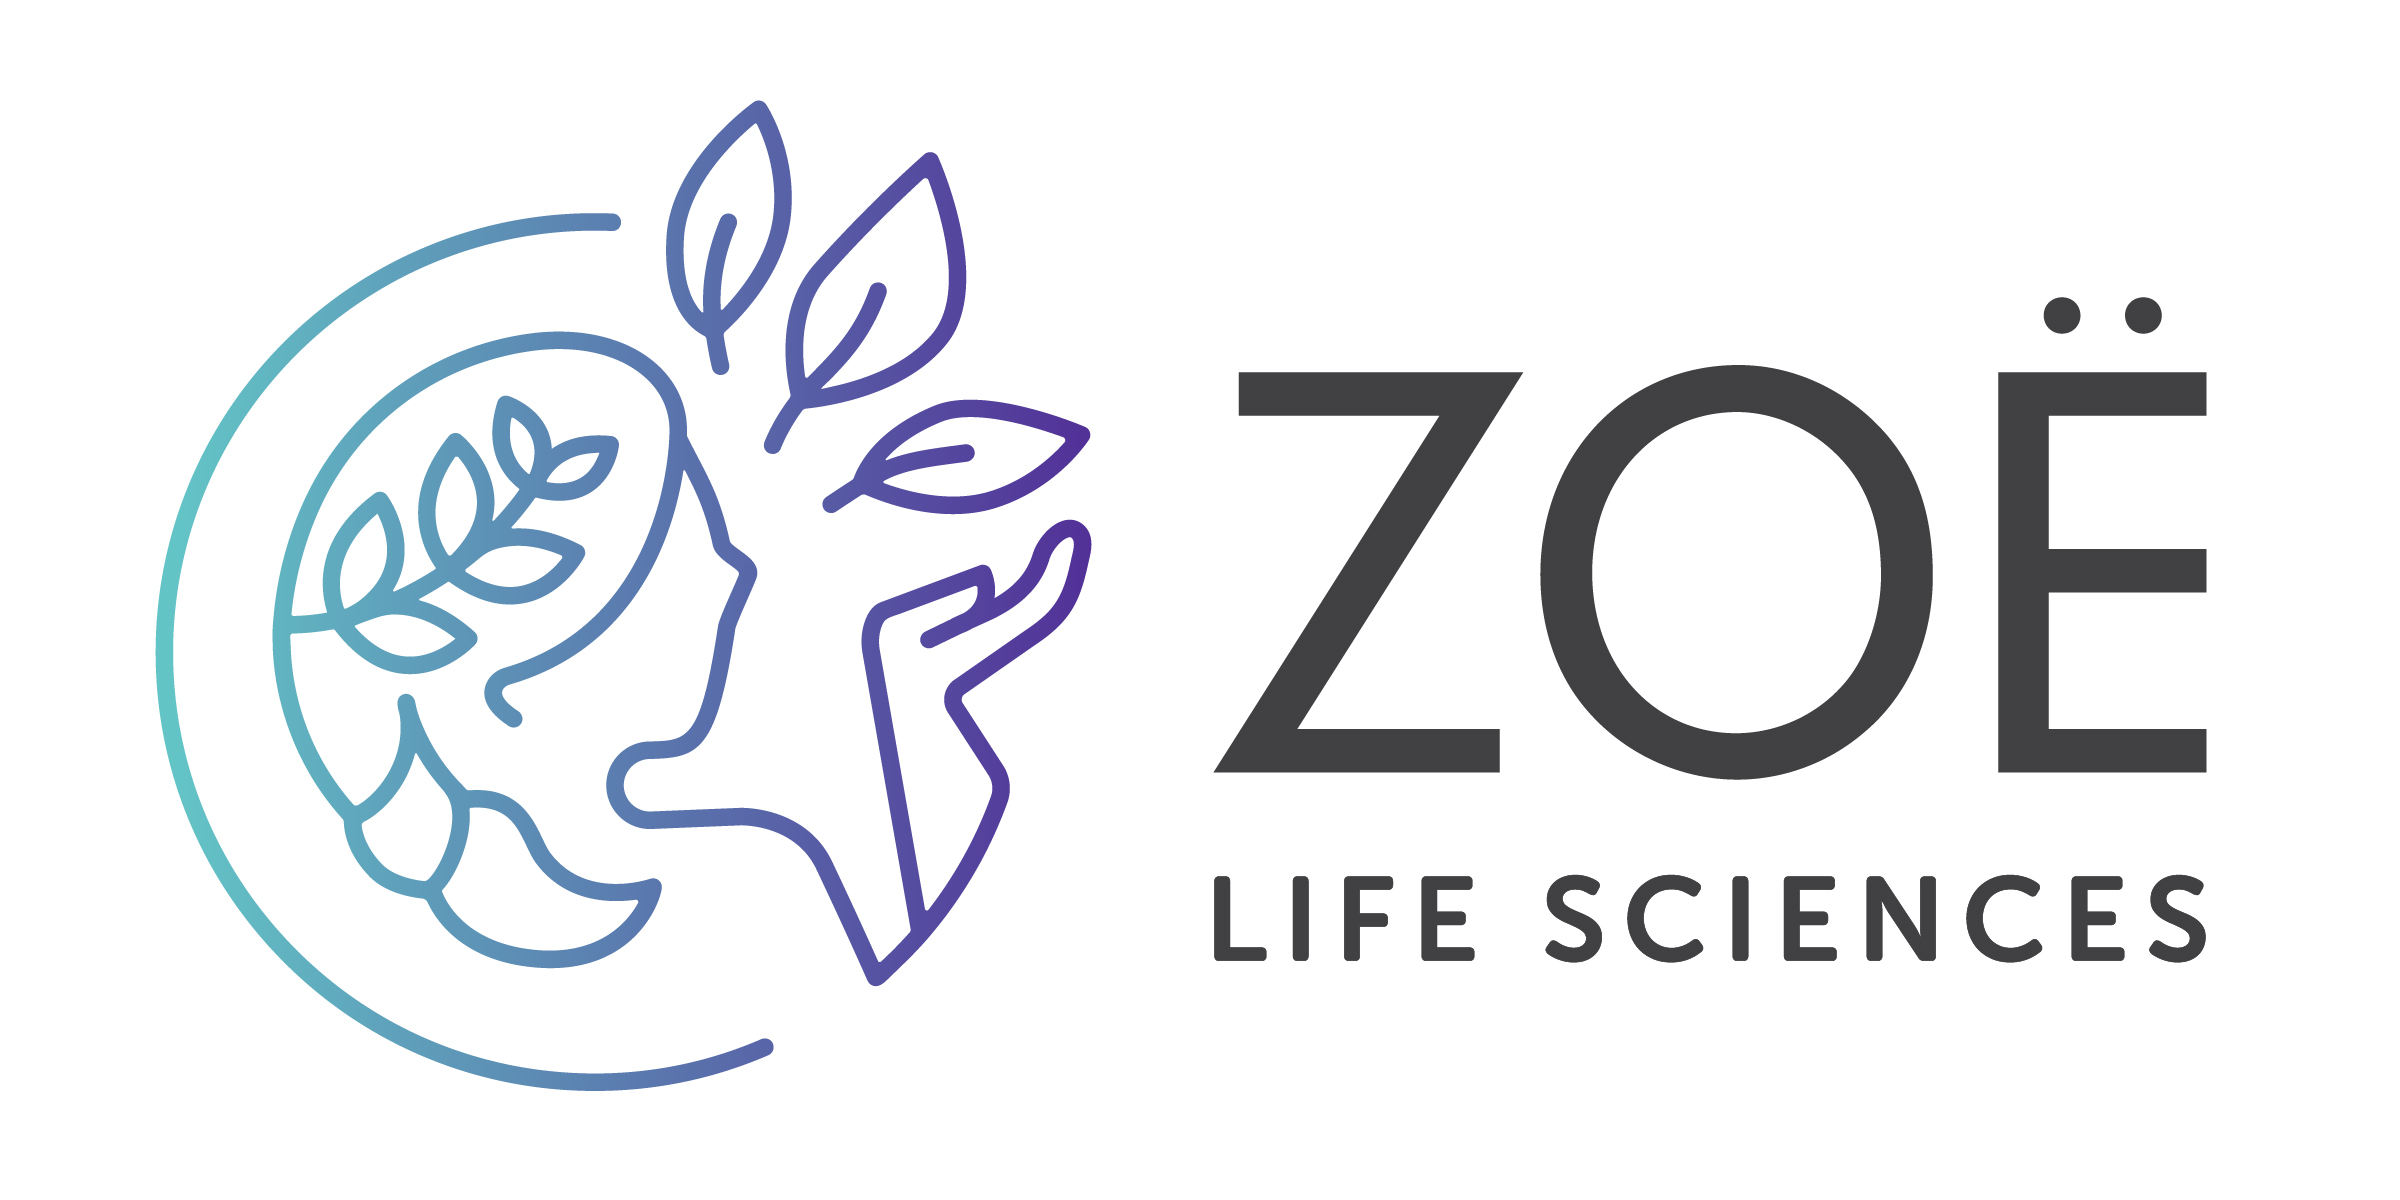 Zoe Life Sciences logo